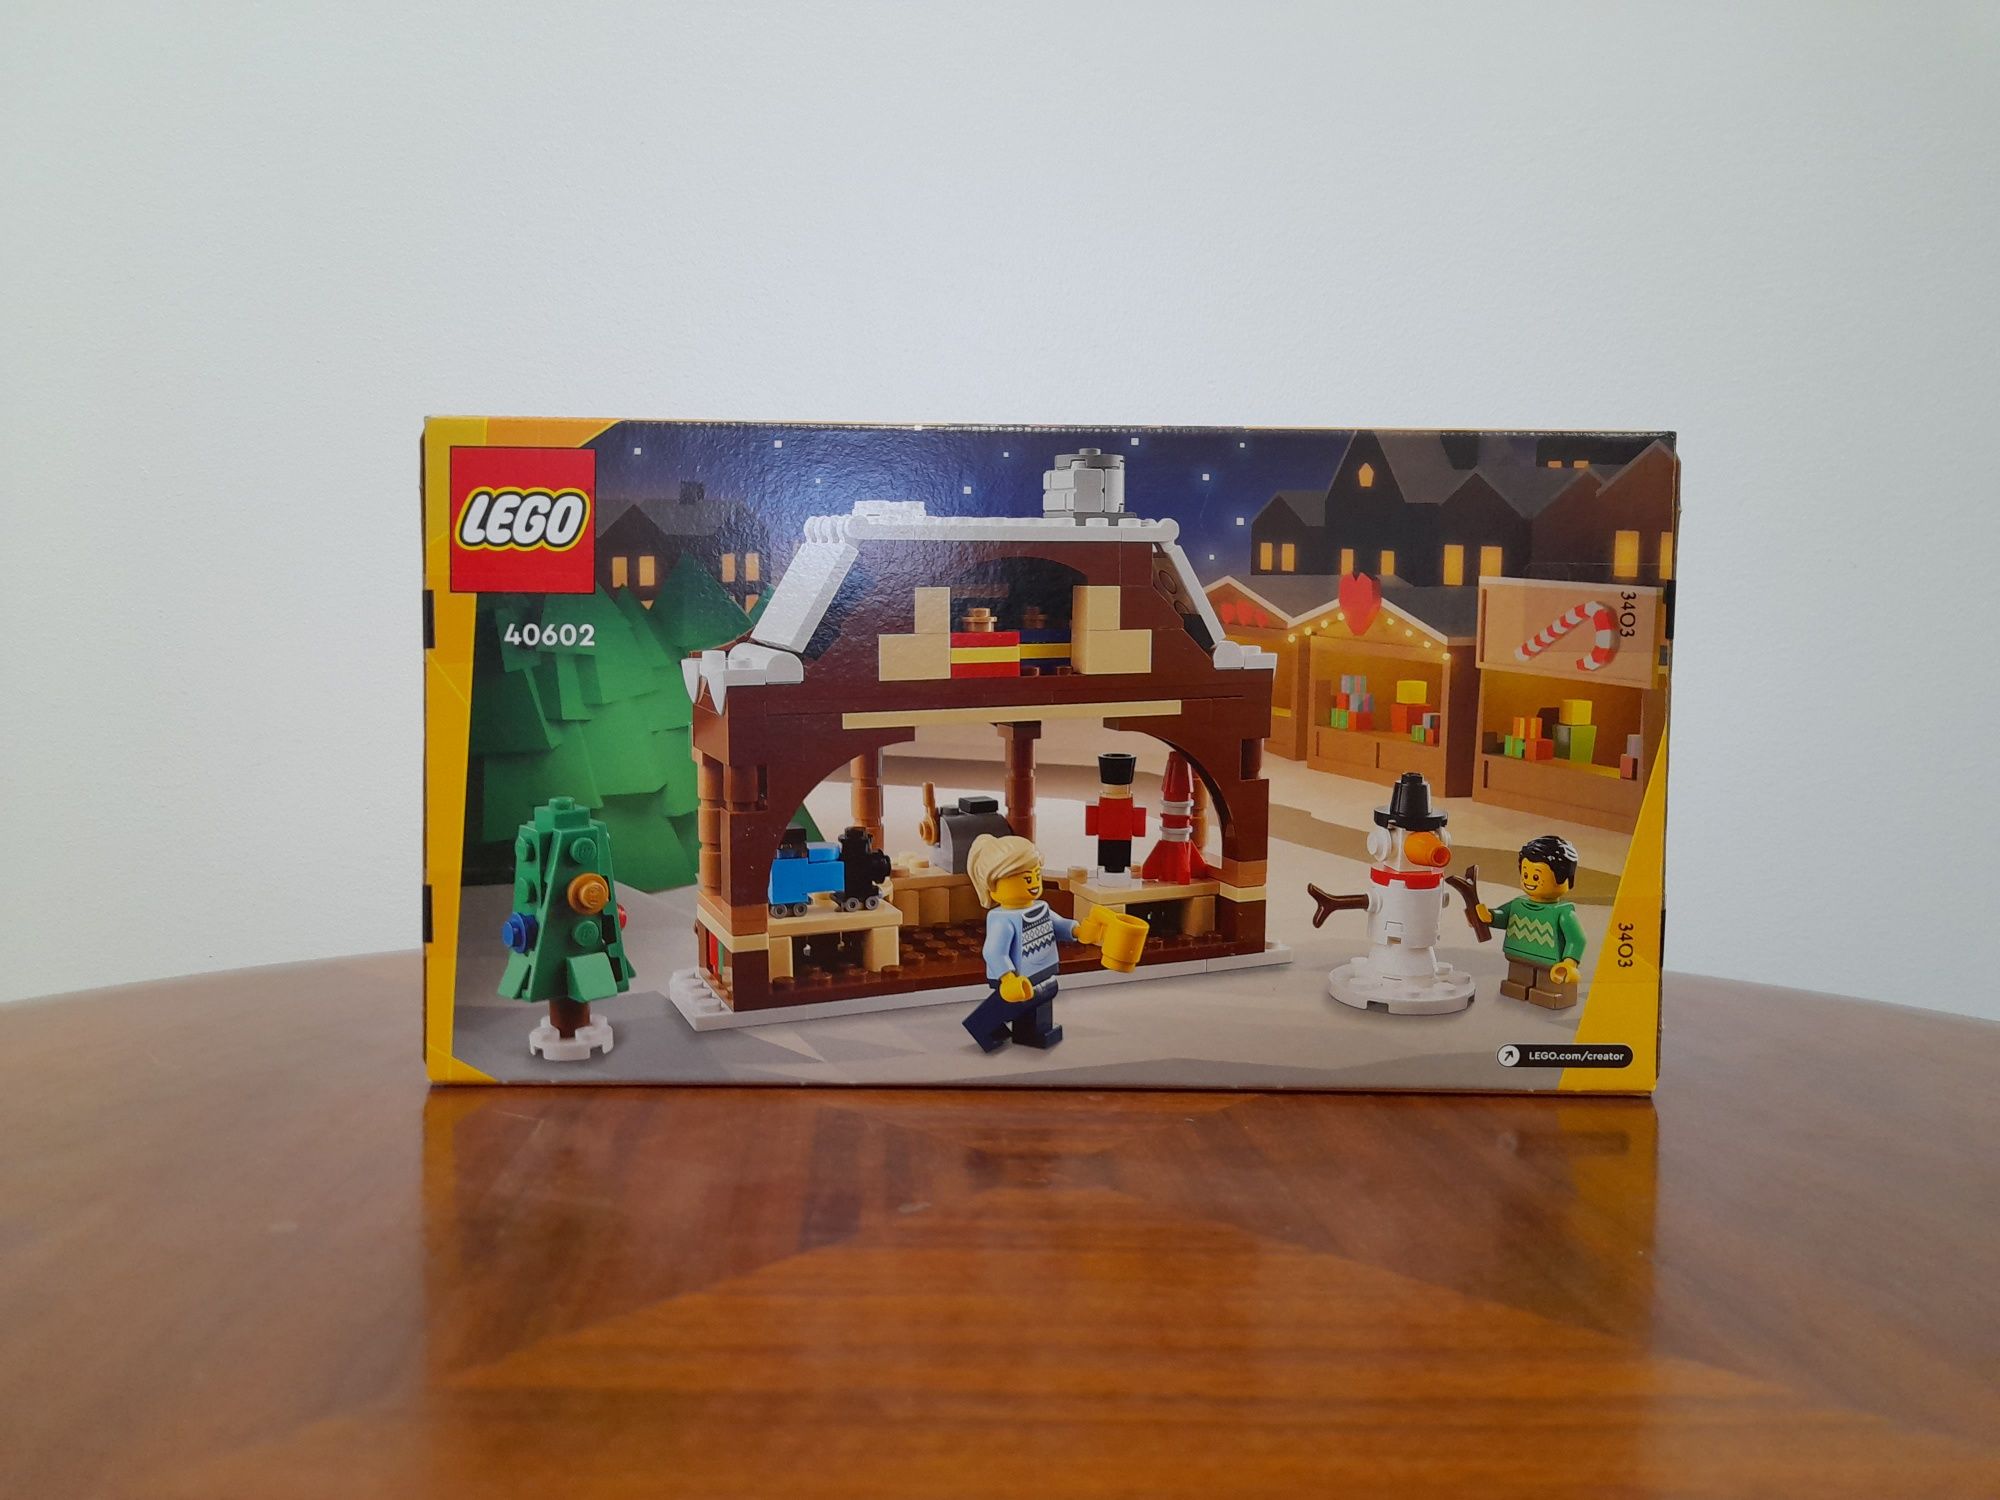 Lego NOVO GWP 40602 "Winter Market Stall"